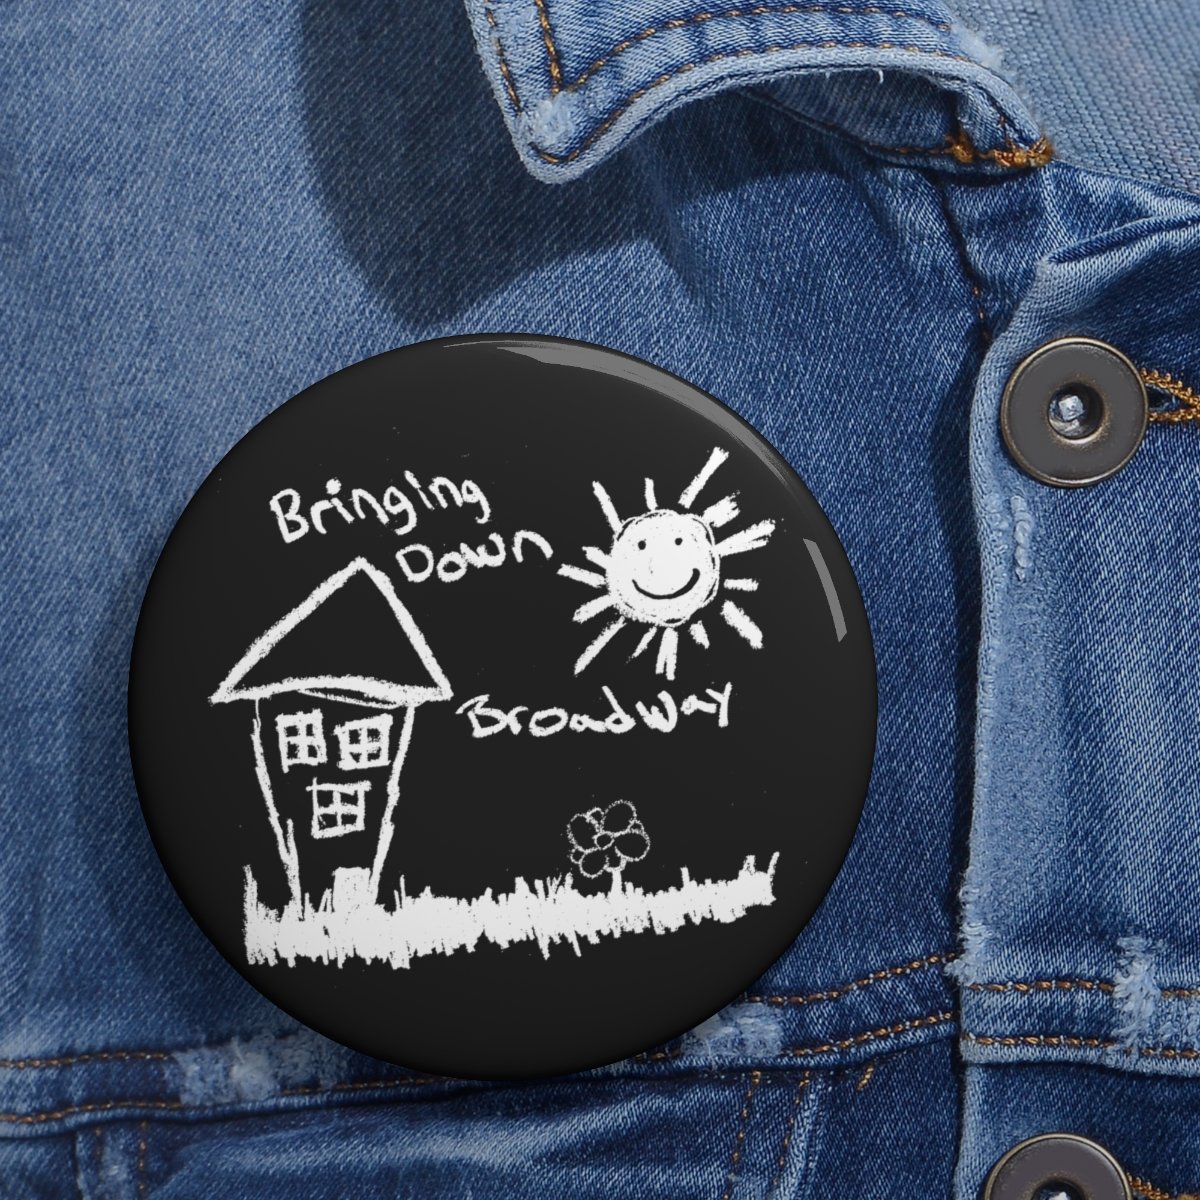 Bringing Down Broadway – Sunshine Ship Pin Buttons